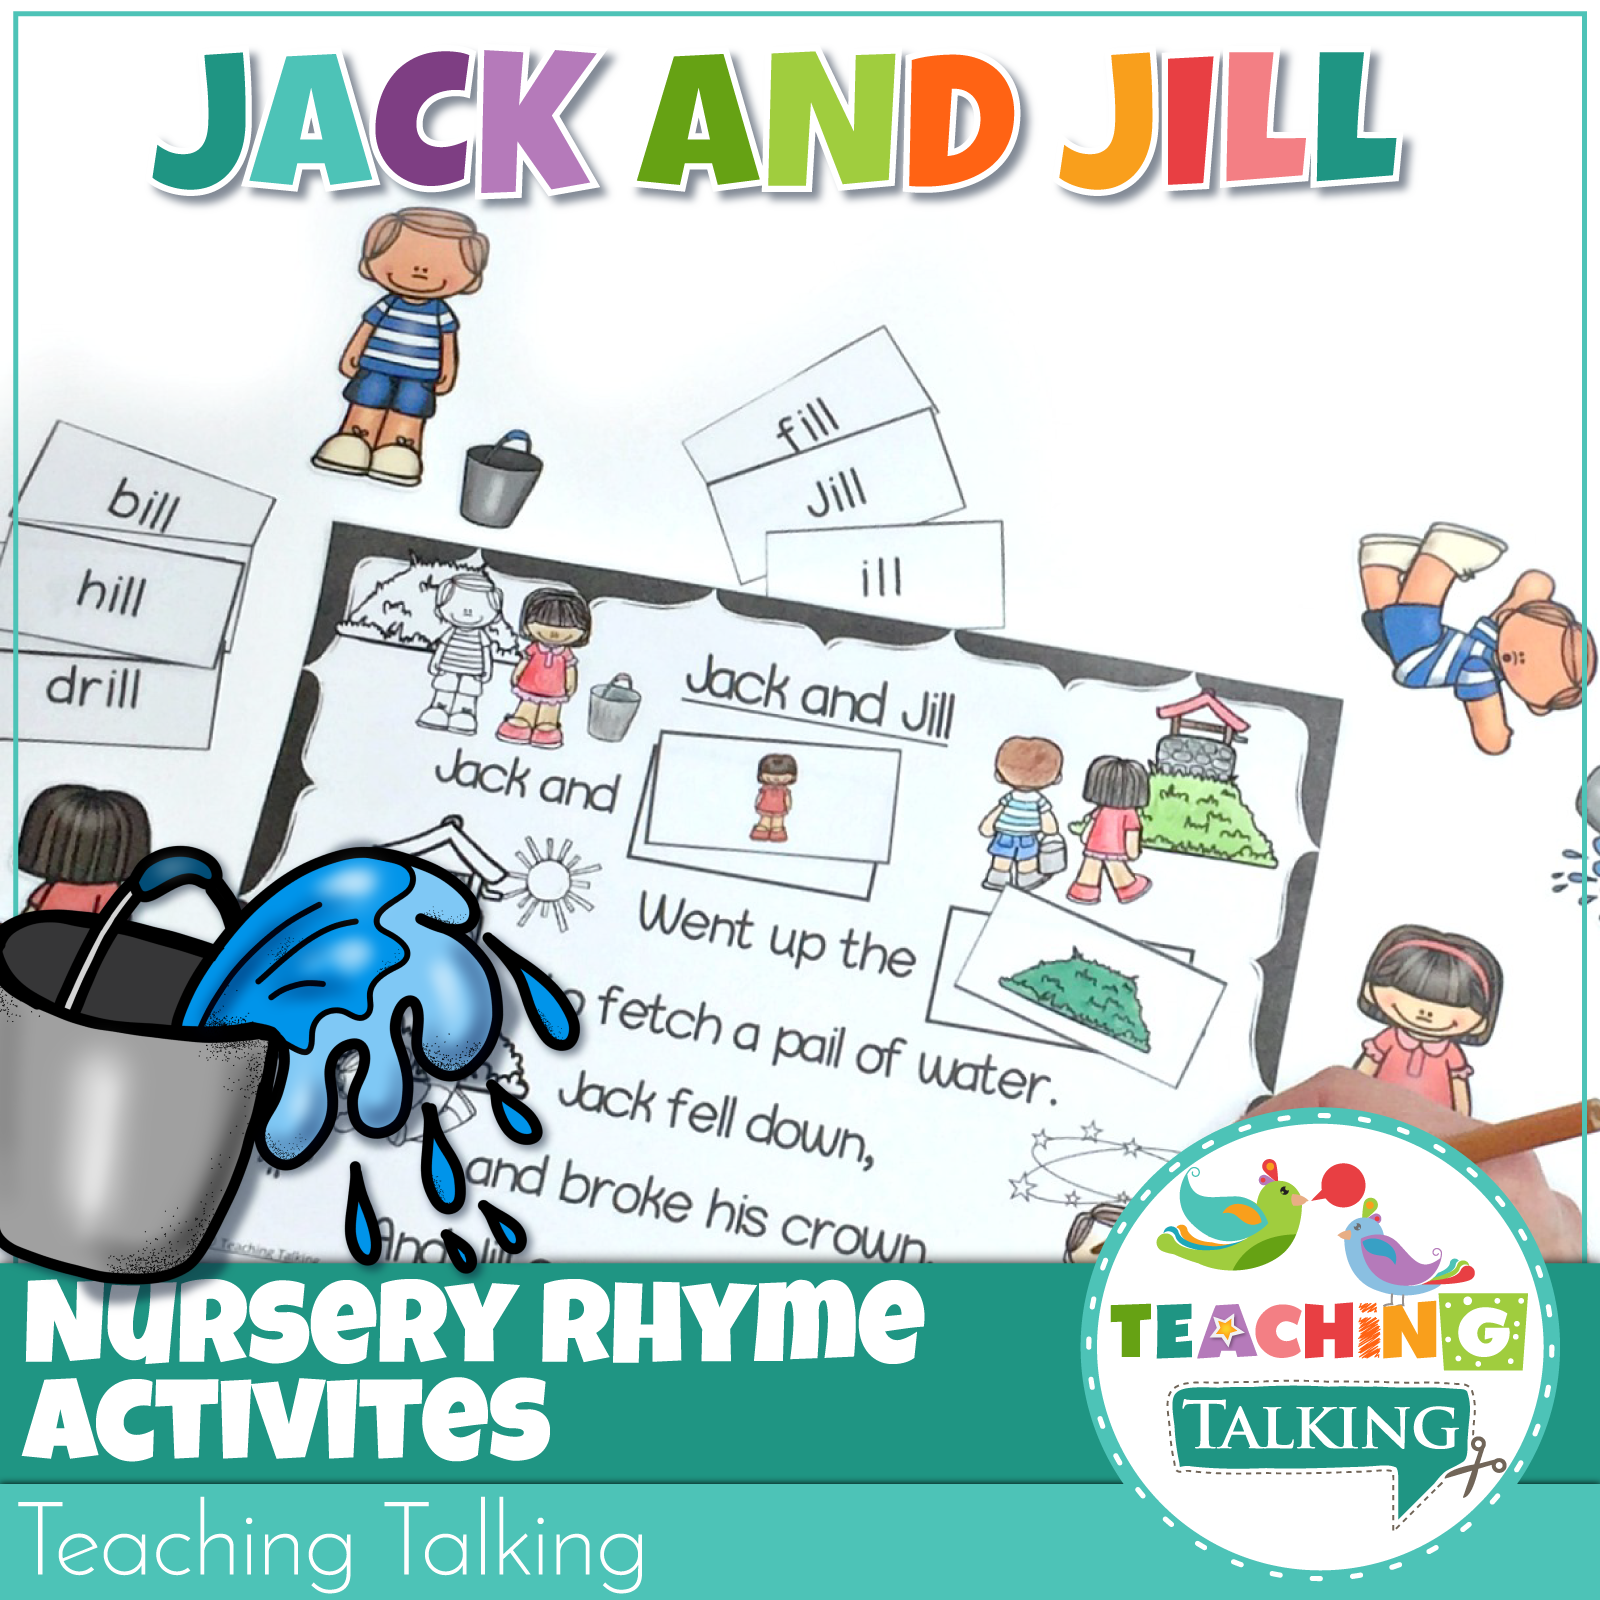 Teaching Talking Printable Nursery Rhyme Activities for Jack and Jill